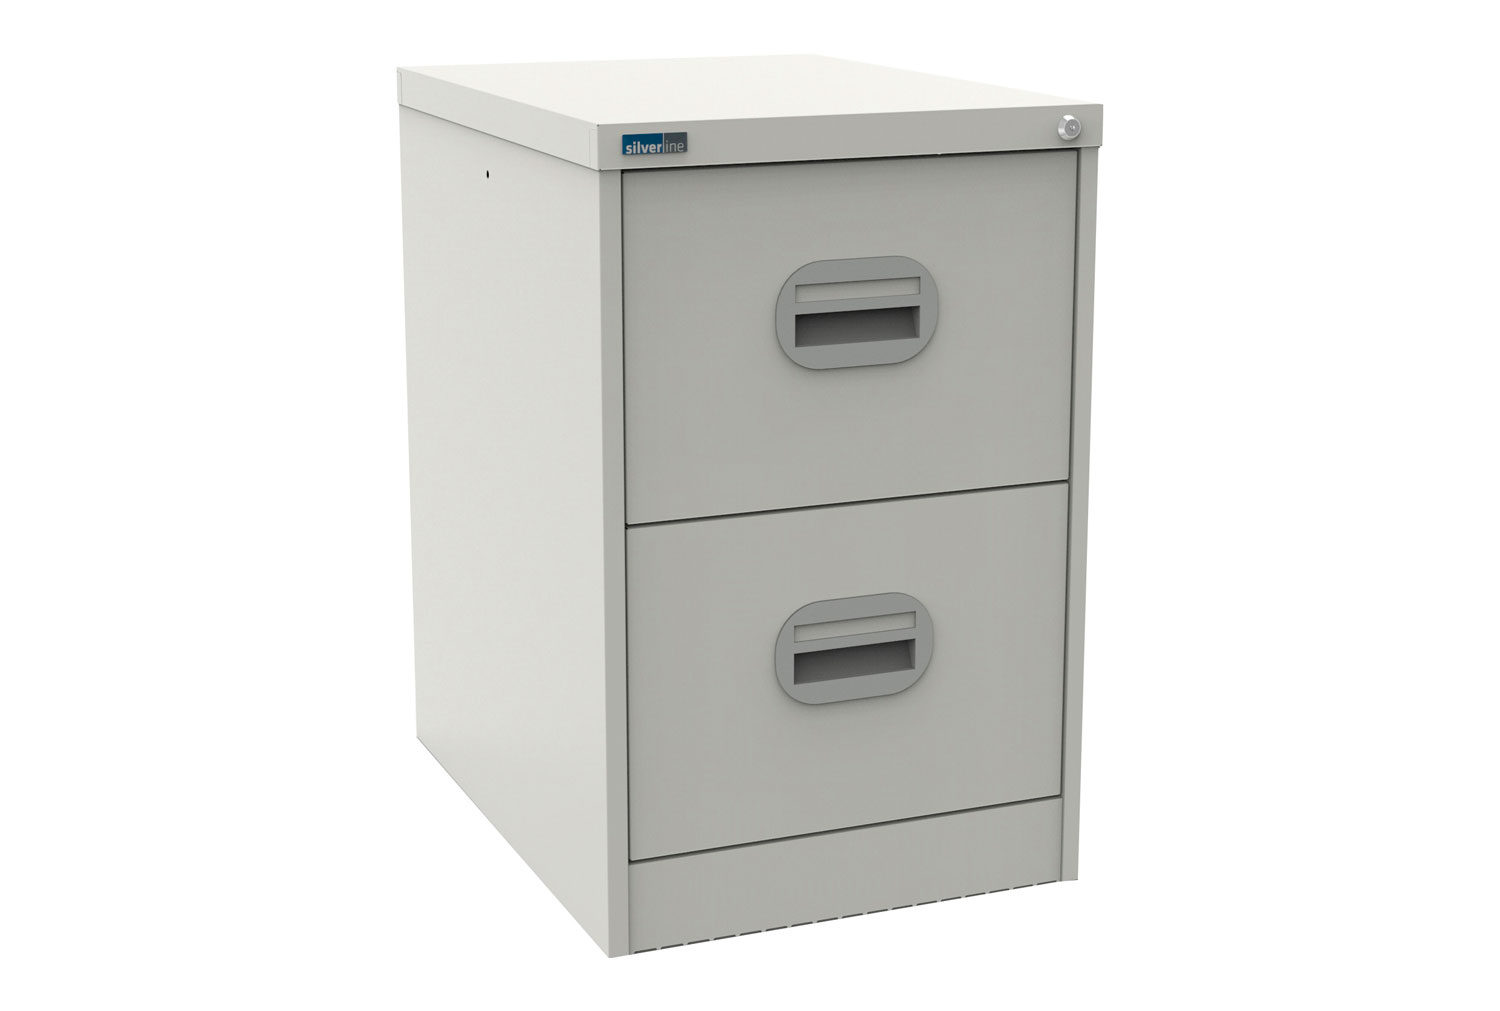 Silverline Kontrax 2 Drawer Filing Cabinet, 2 Drawer - 46wx62dx71h (cm), White Semi Gloss